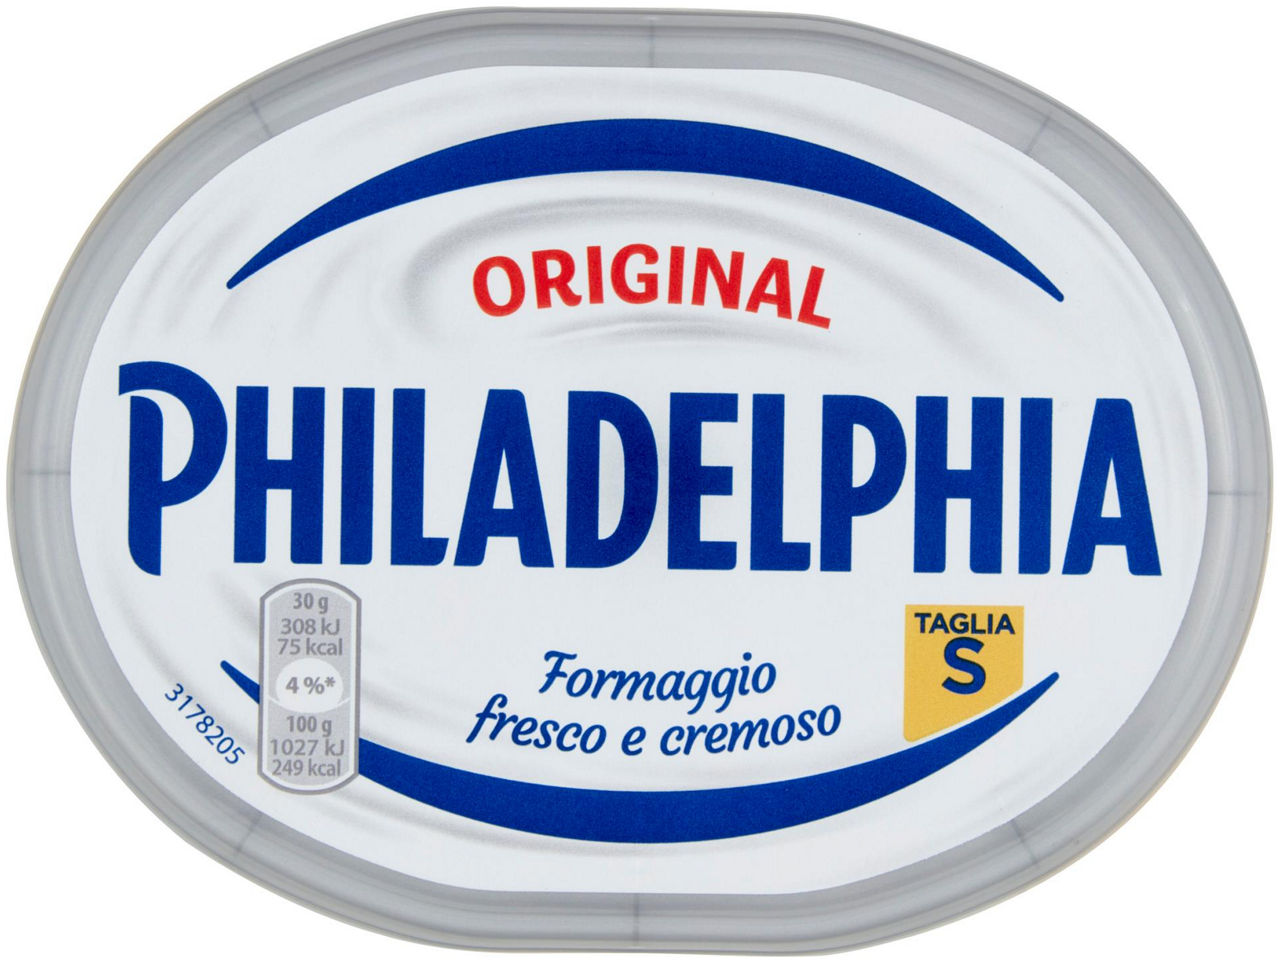 Philadelphia Original formaggio fresco spalmabile - 150g - 0